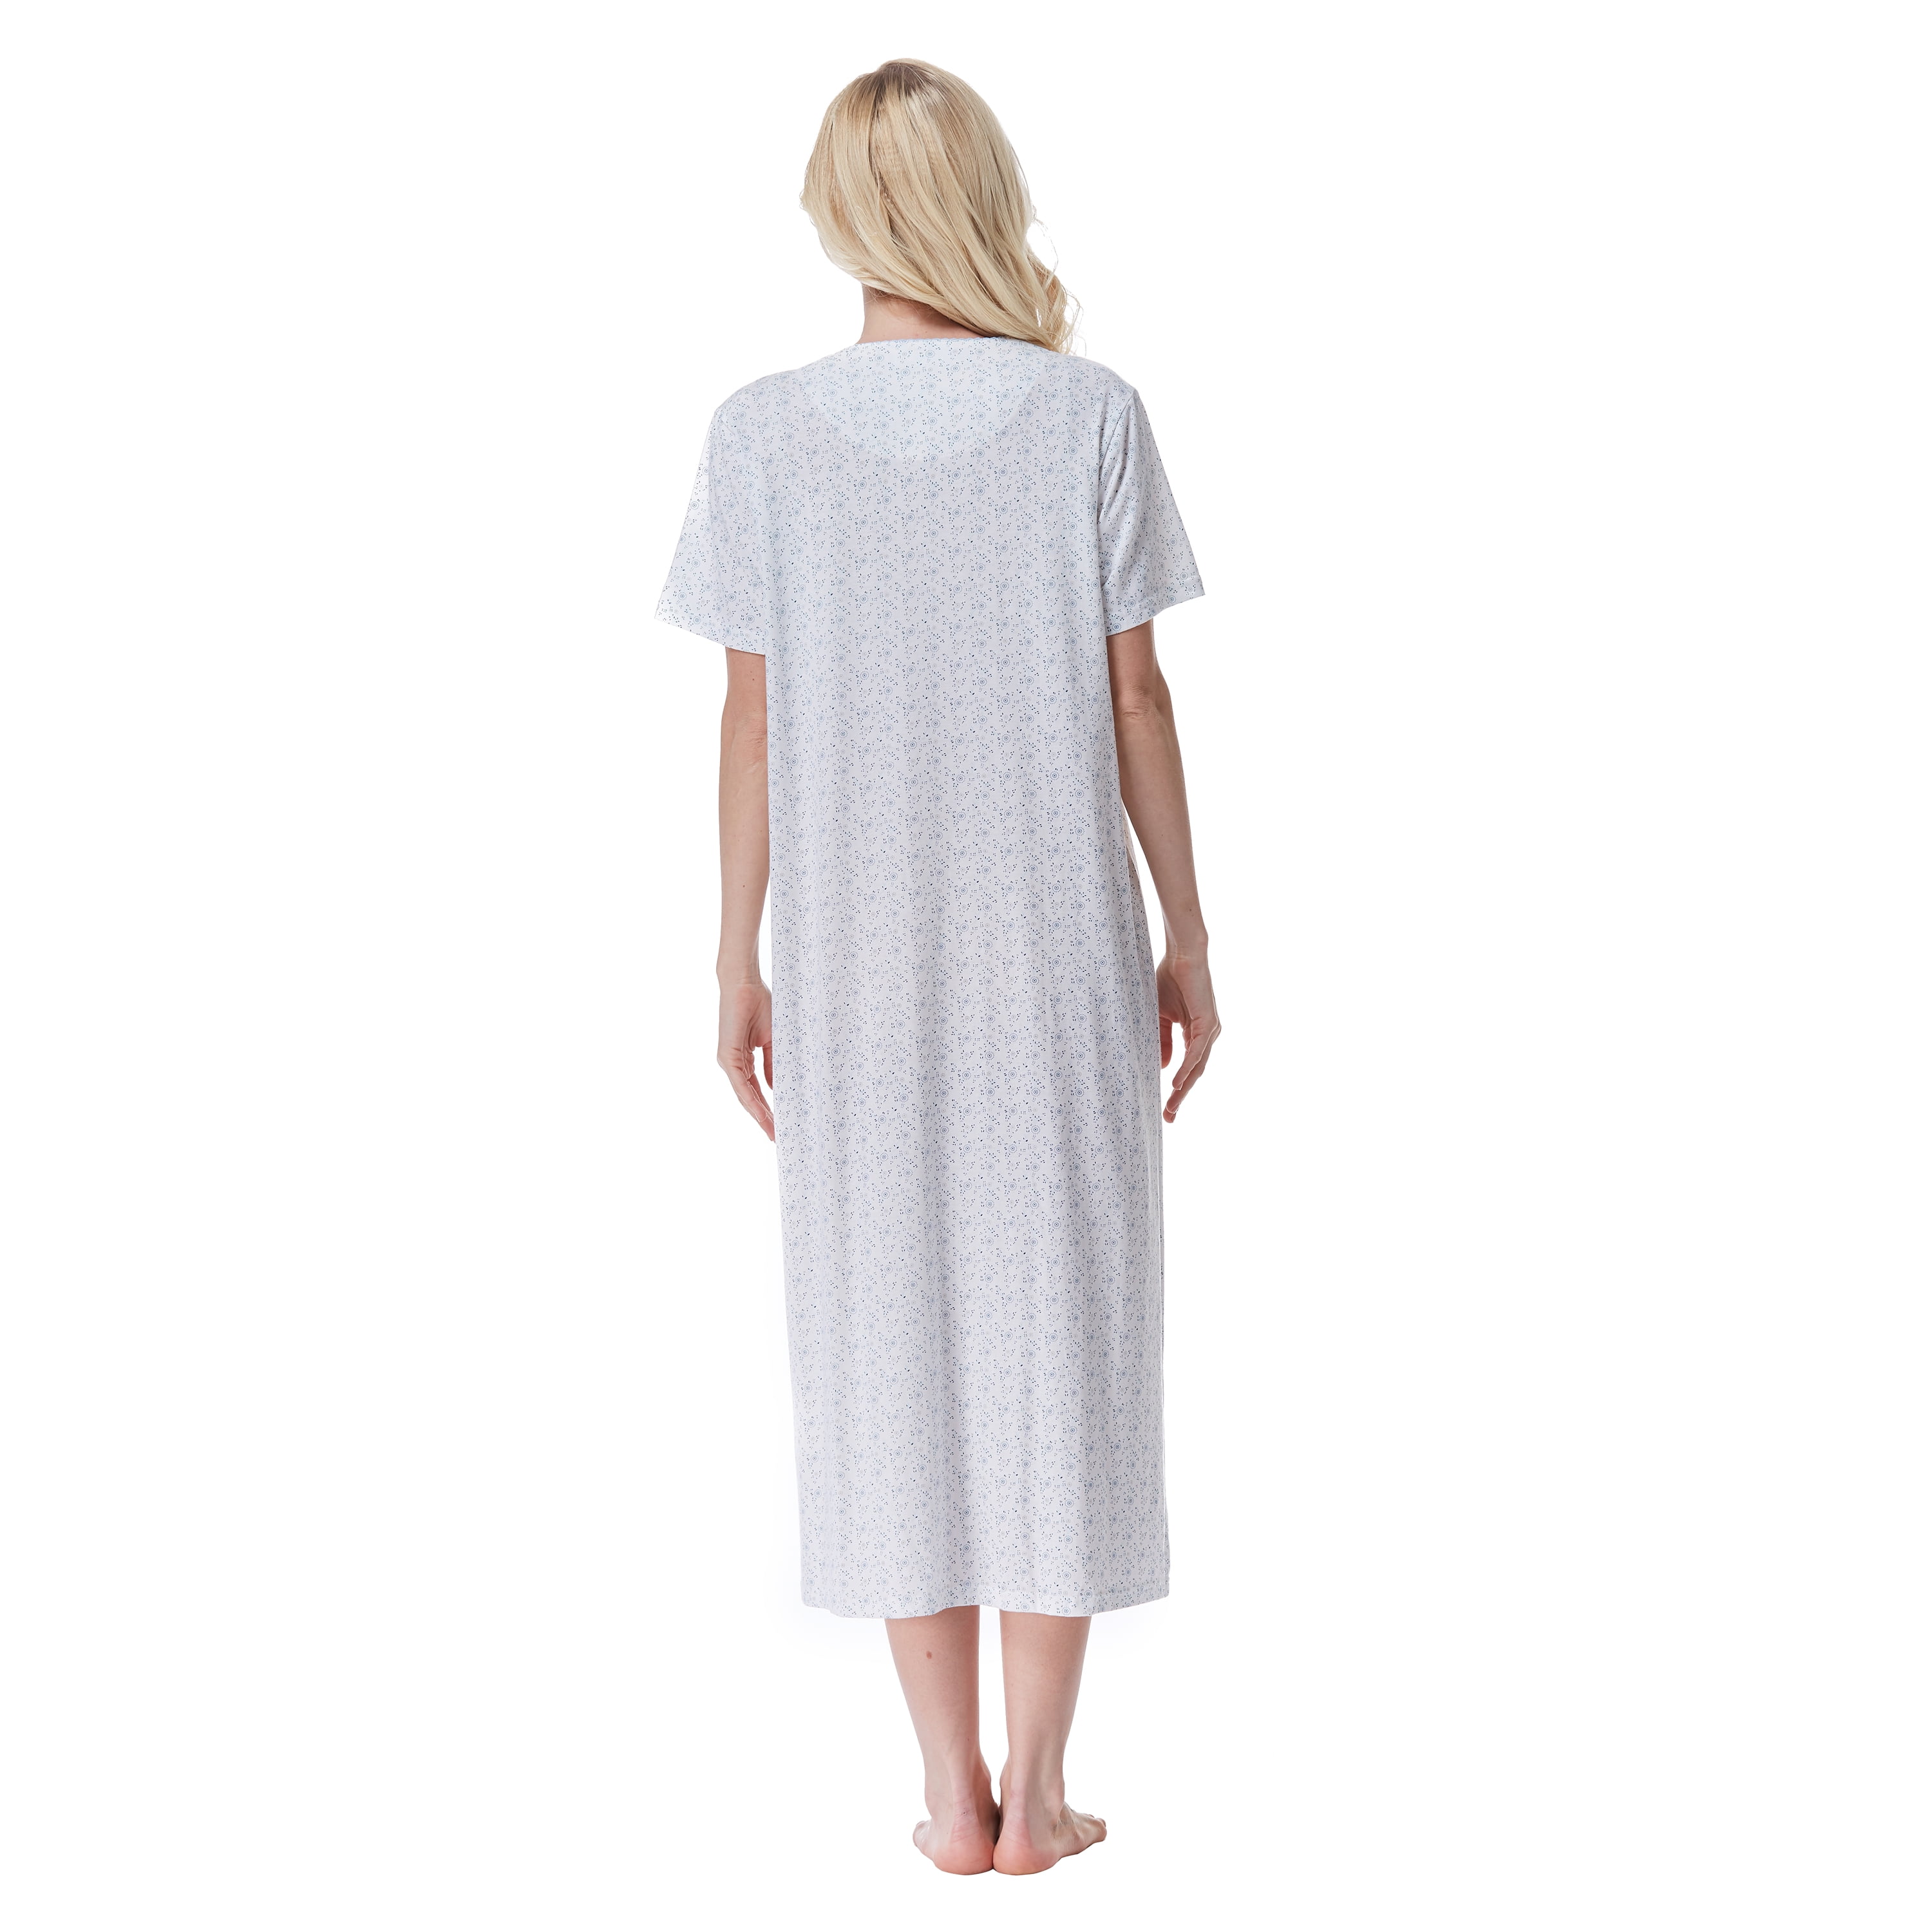 Keyocean Plus Size Women Nightgown, 100% Cotton Lightweight Short